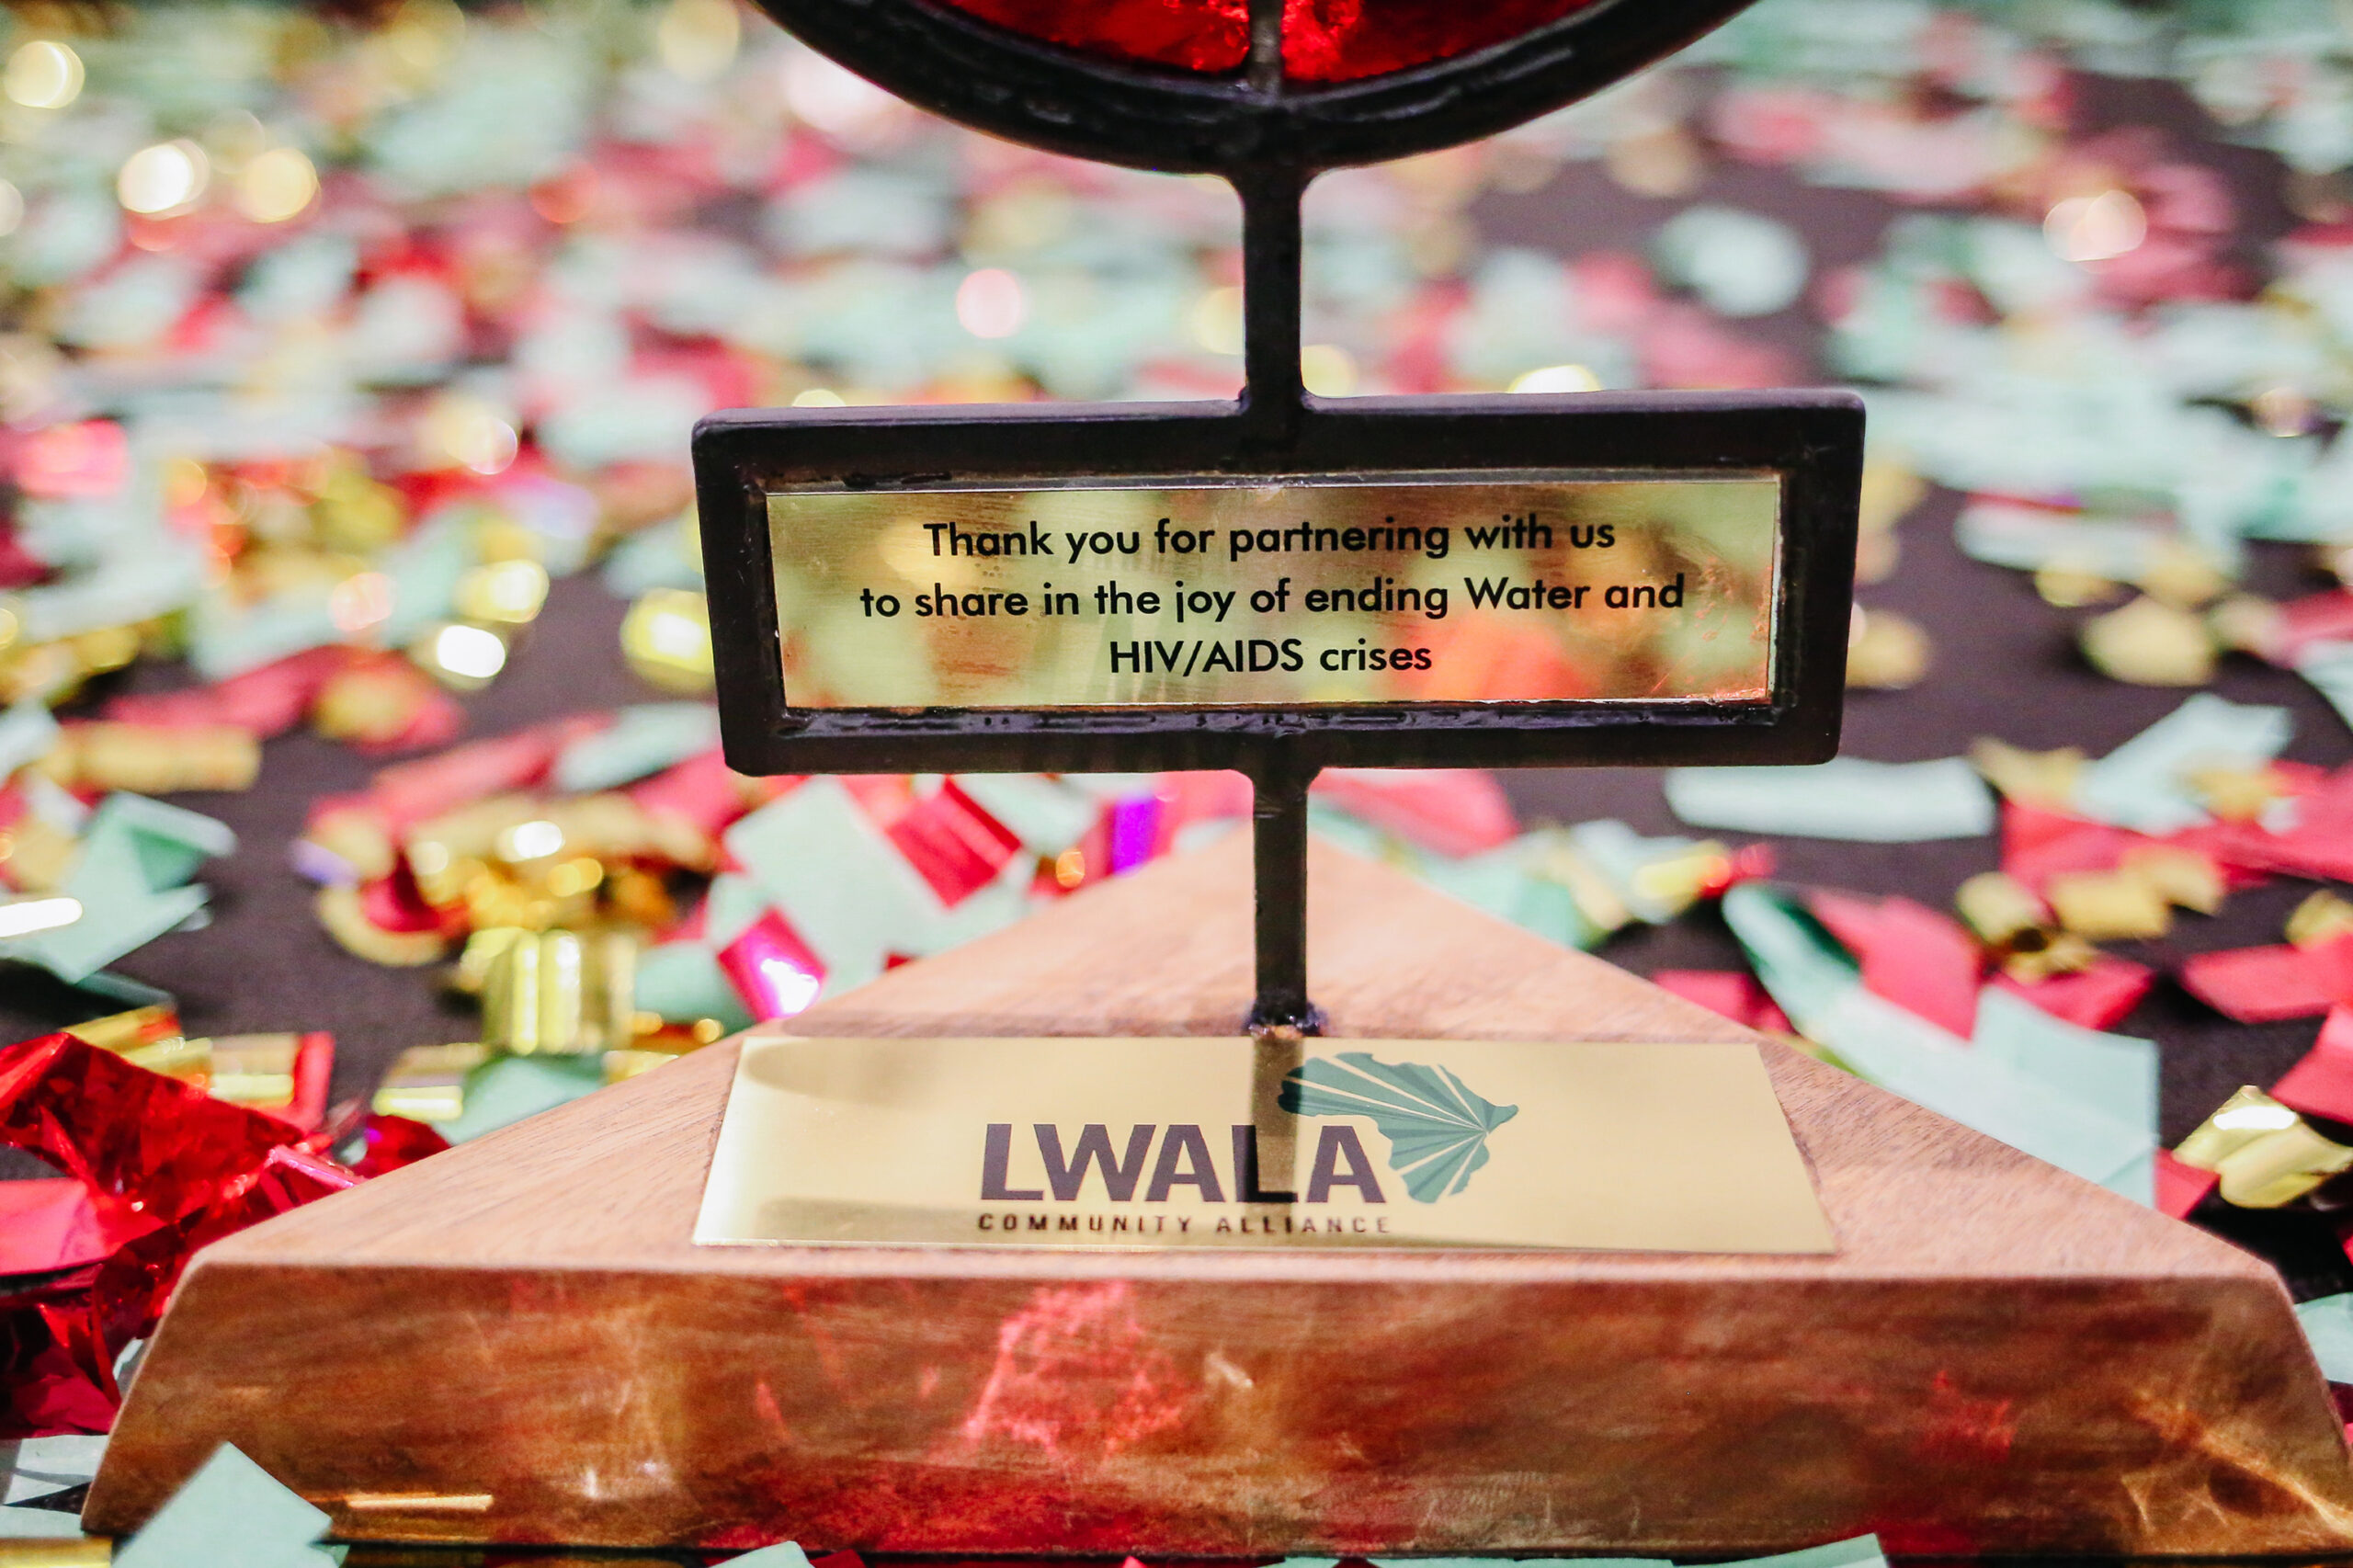 The Lwala Graduation Award Trophy